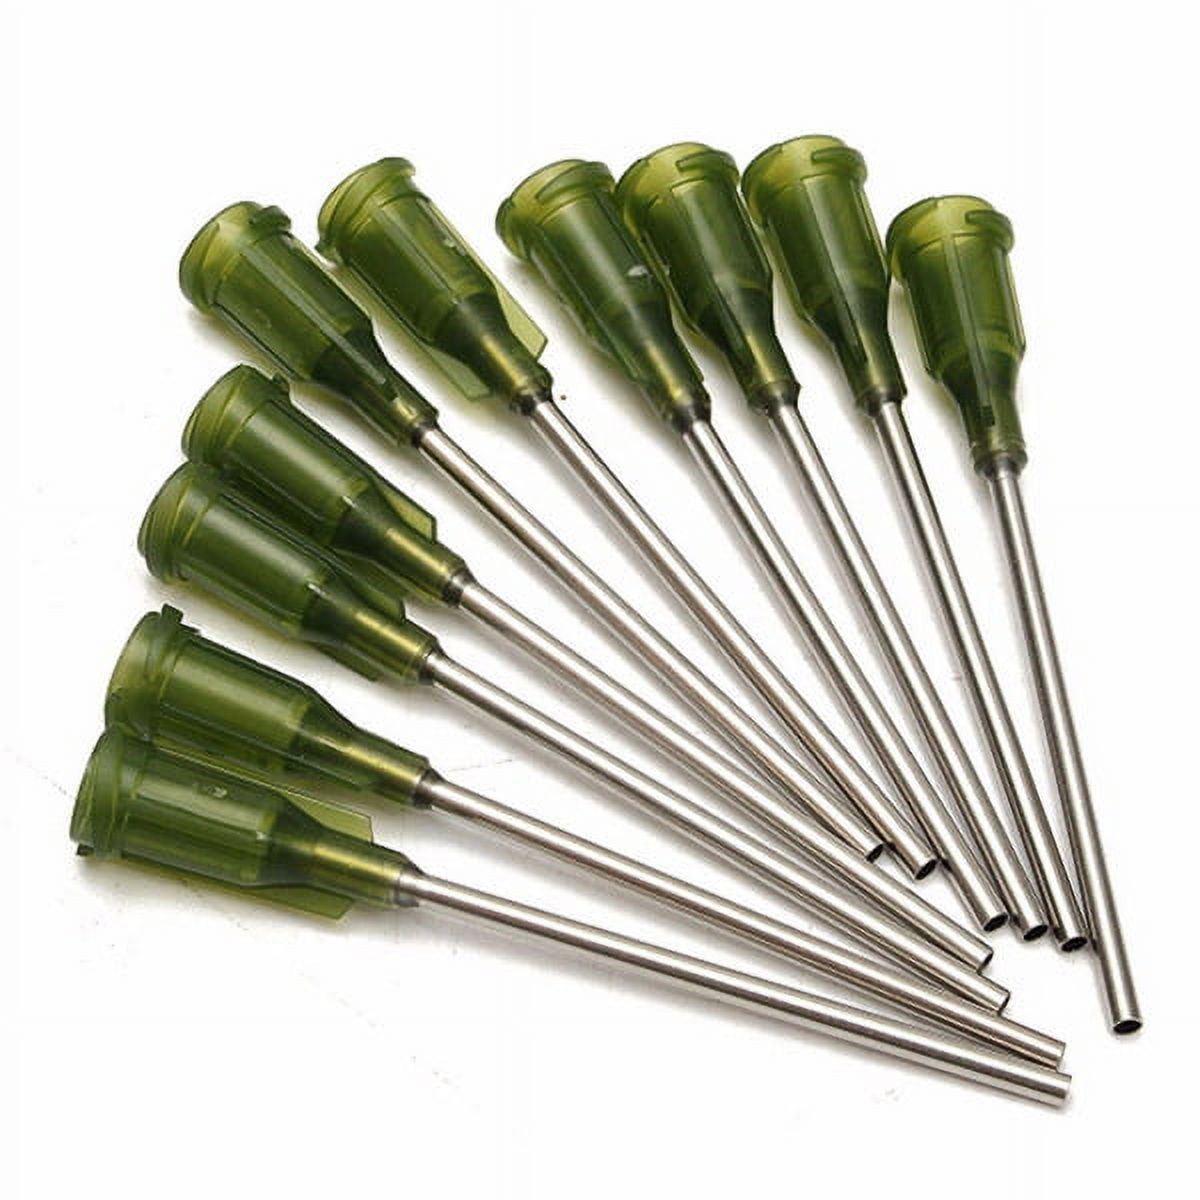 Bulk Loose Needles: Plastic Needles - Lime Green